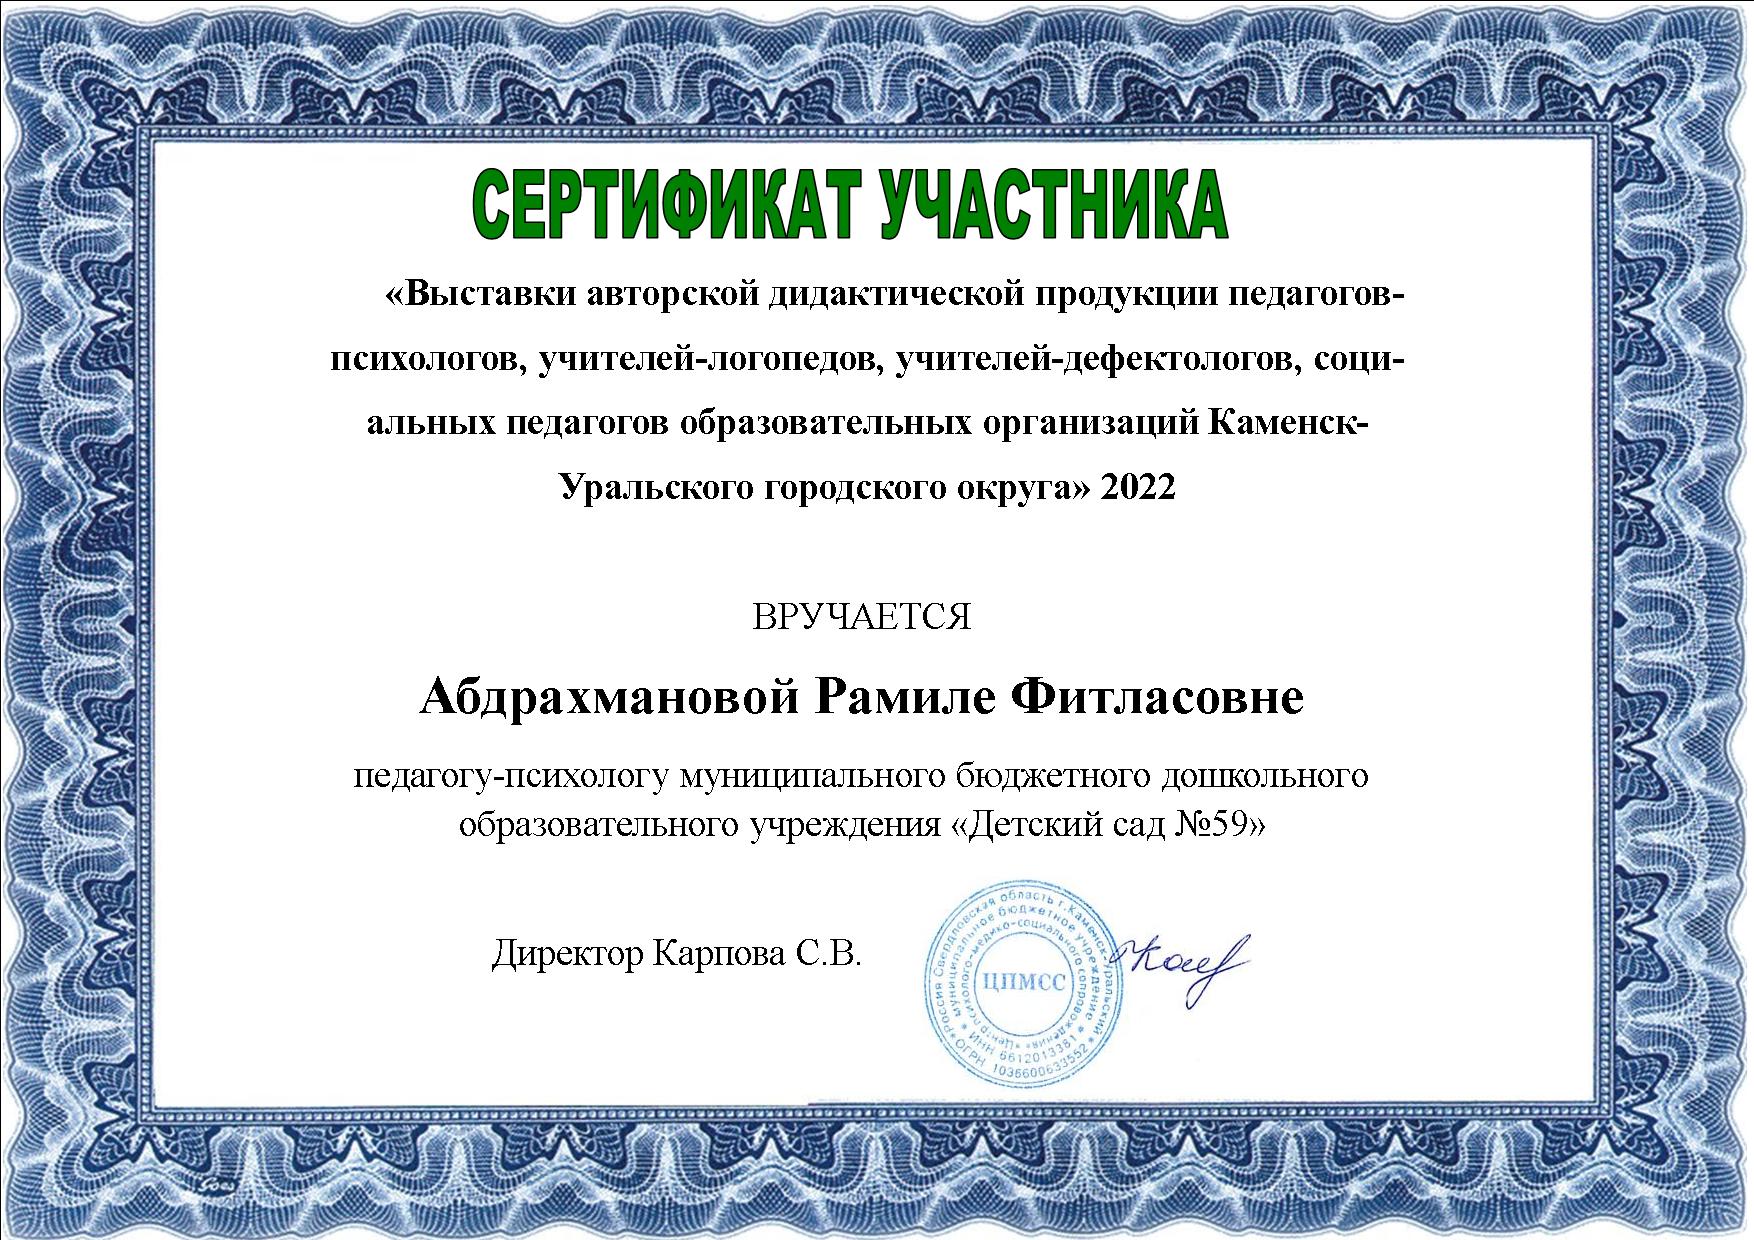 Сертификат педагогу психологу Детского сада 59 Абдрахмановой Р.Ф. 